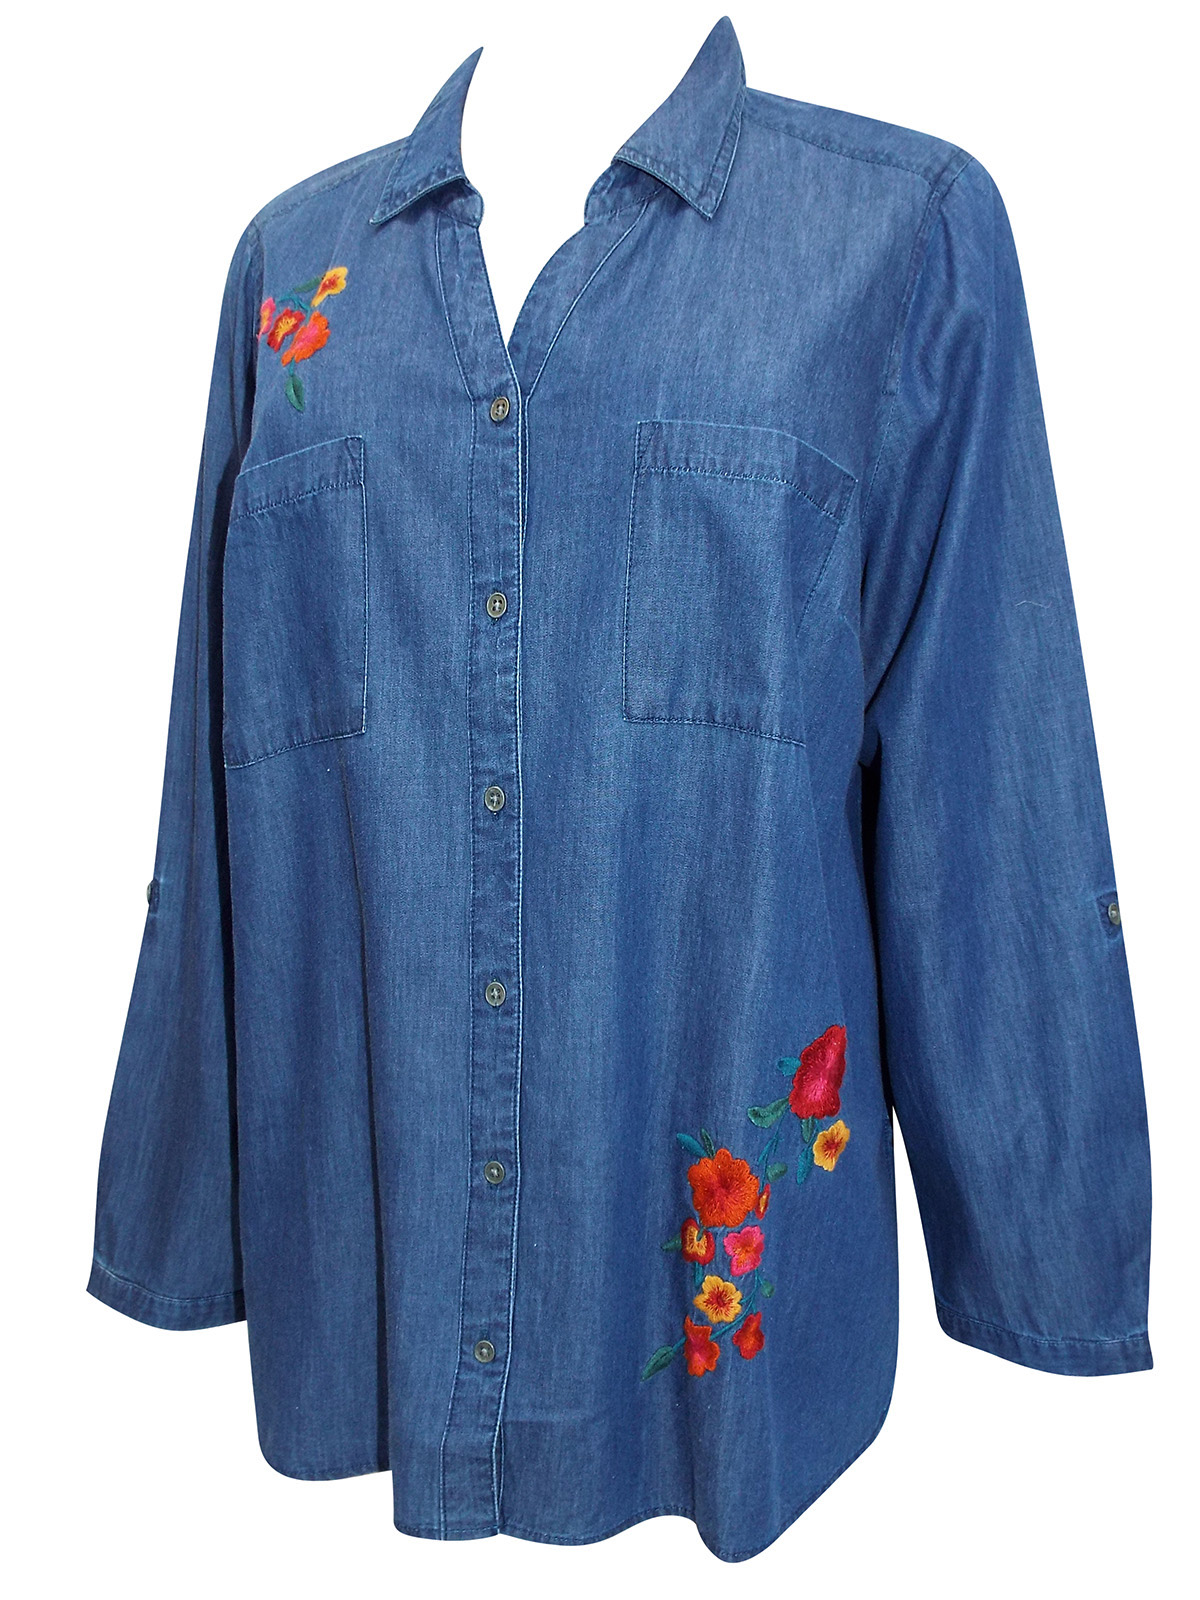 Intro Intro Blue Denim Floral Embroidered Dipped Hem Denim Shirt